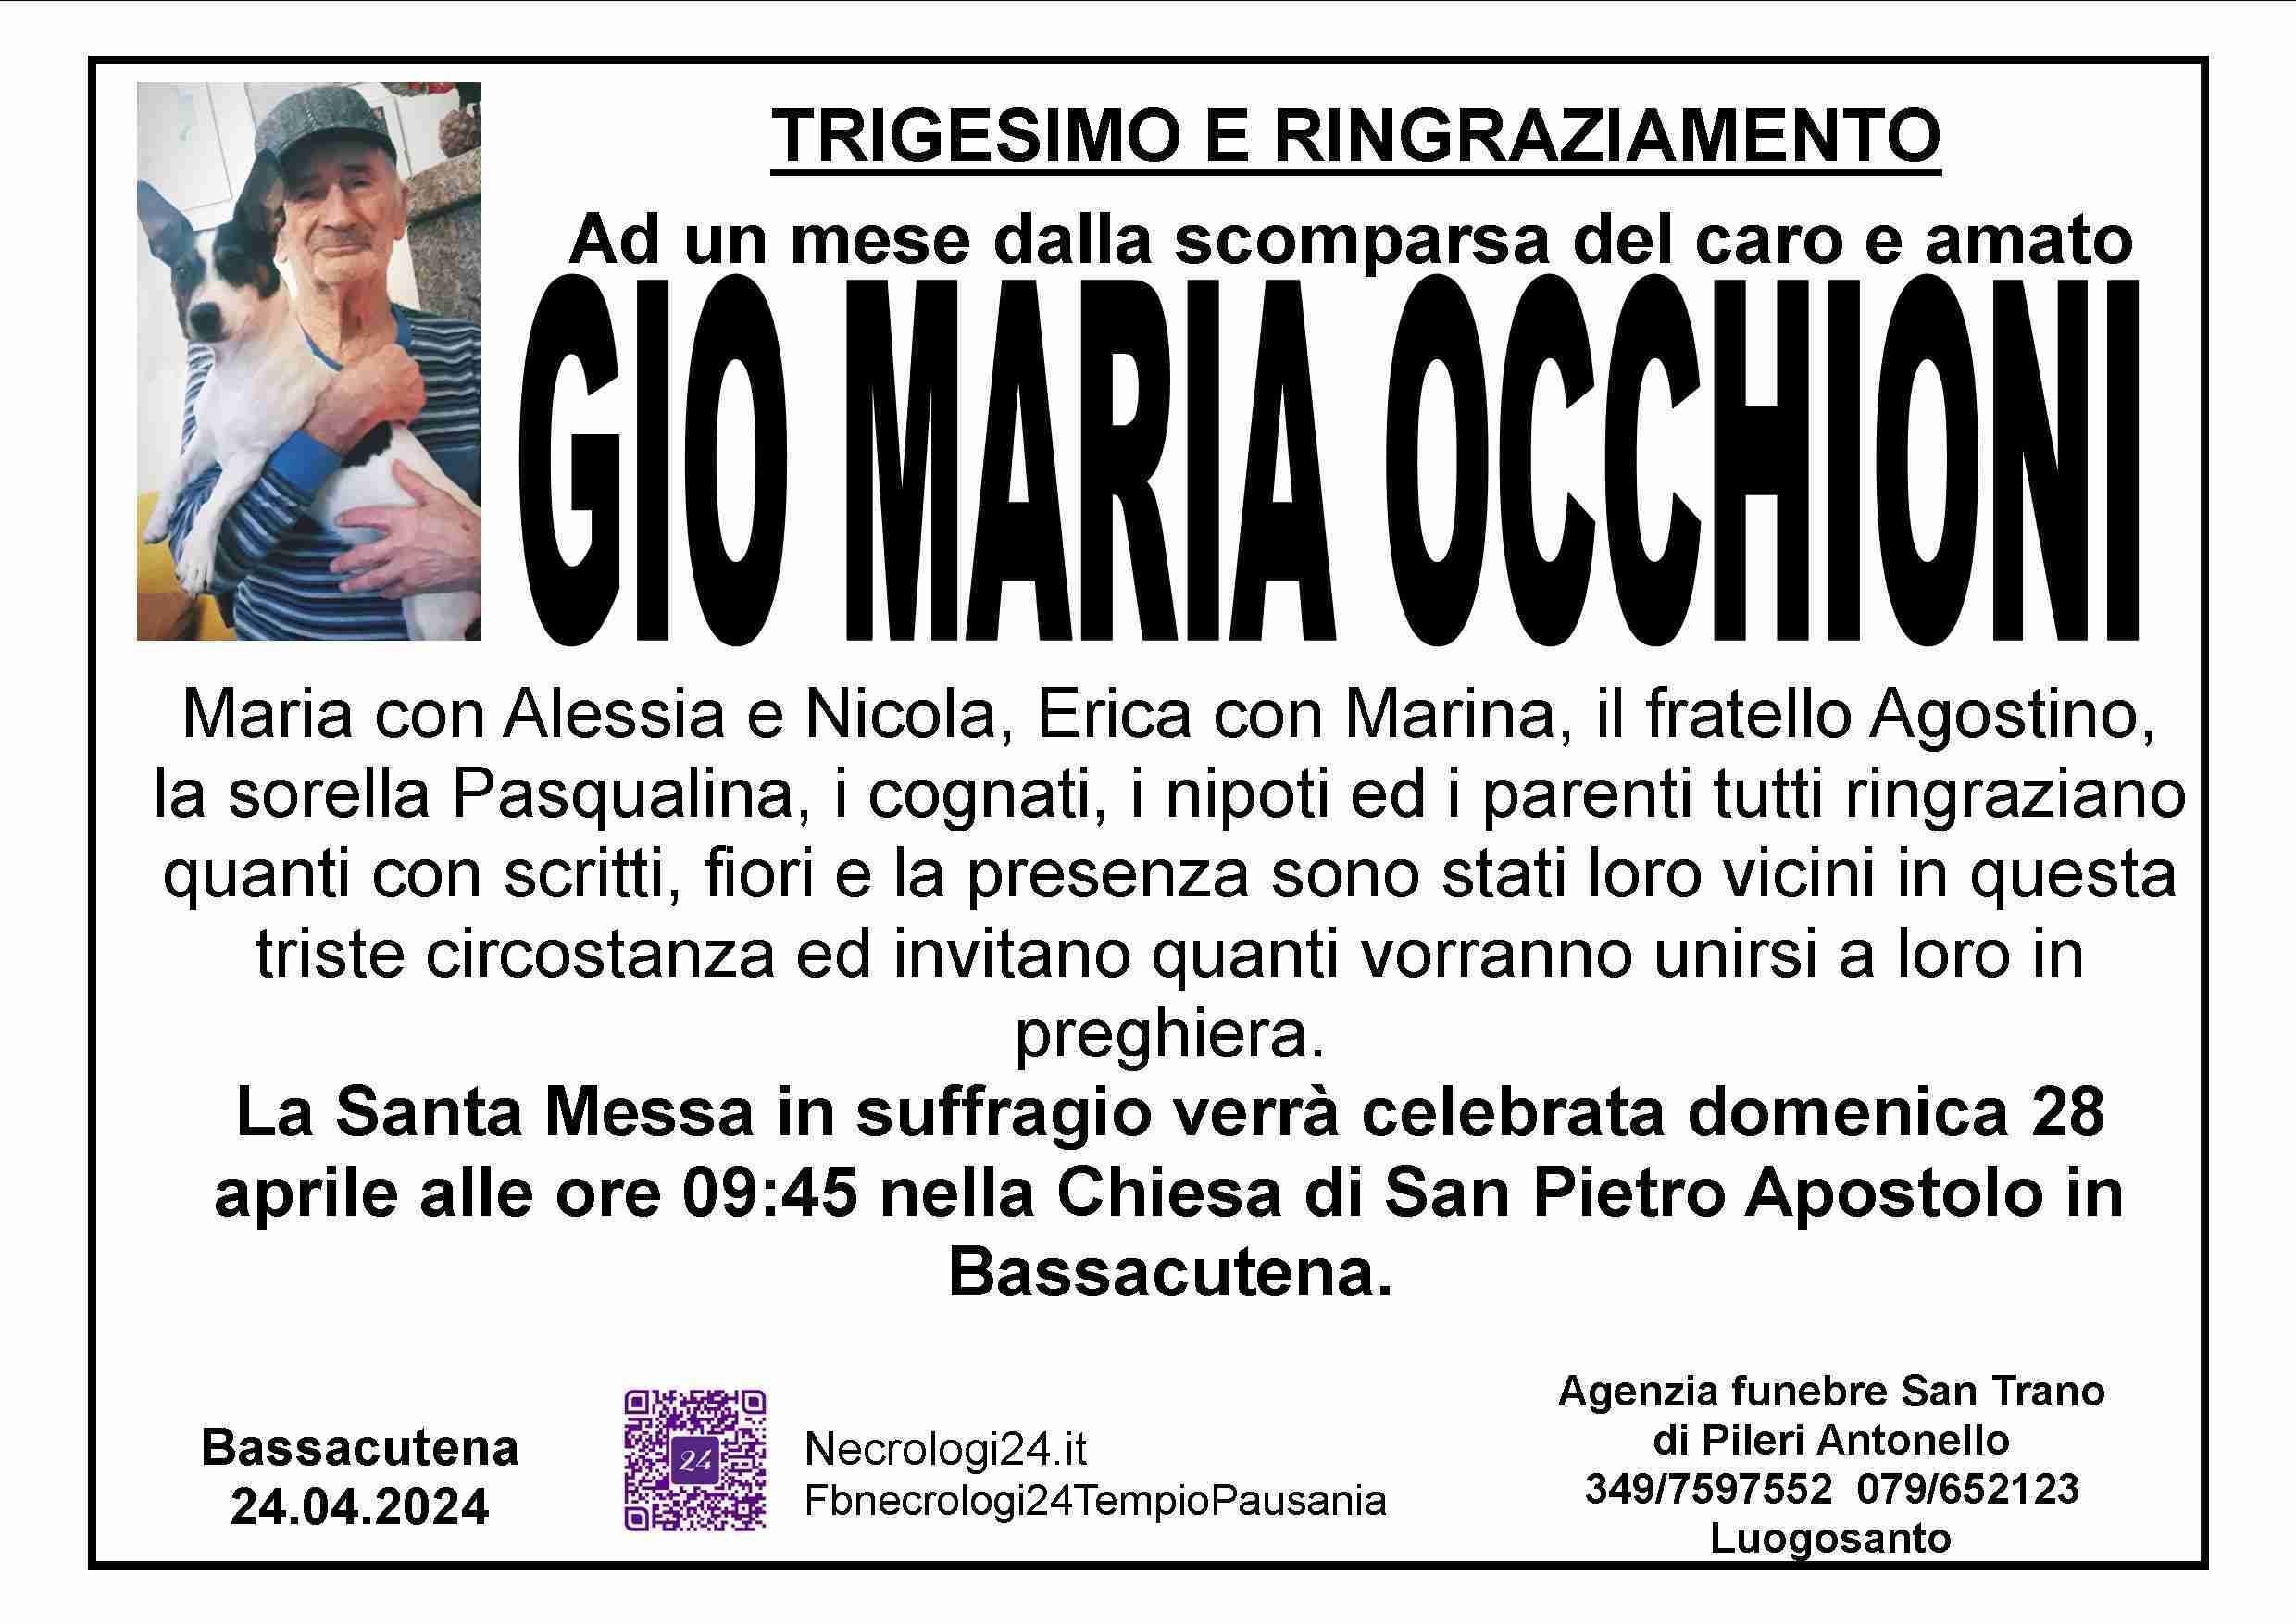 Gio Maria Occhioni